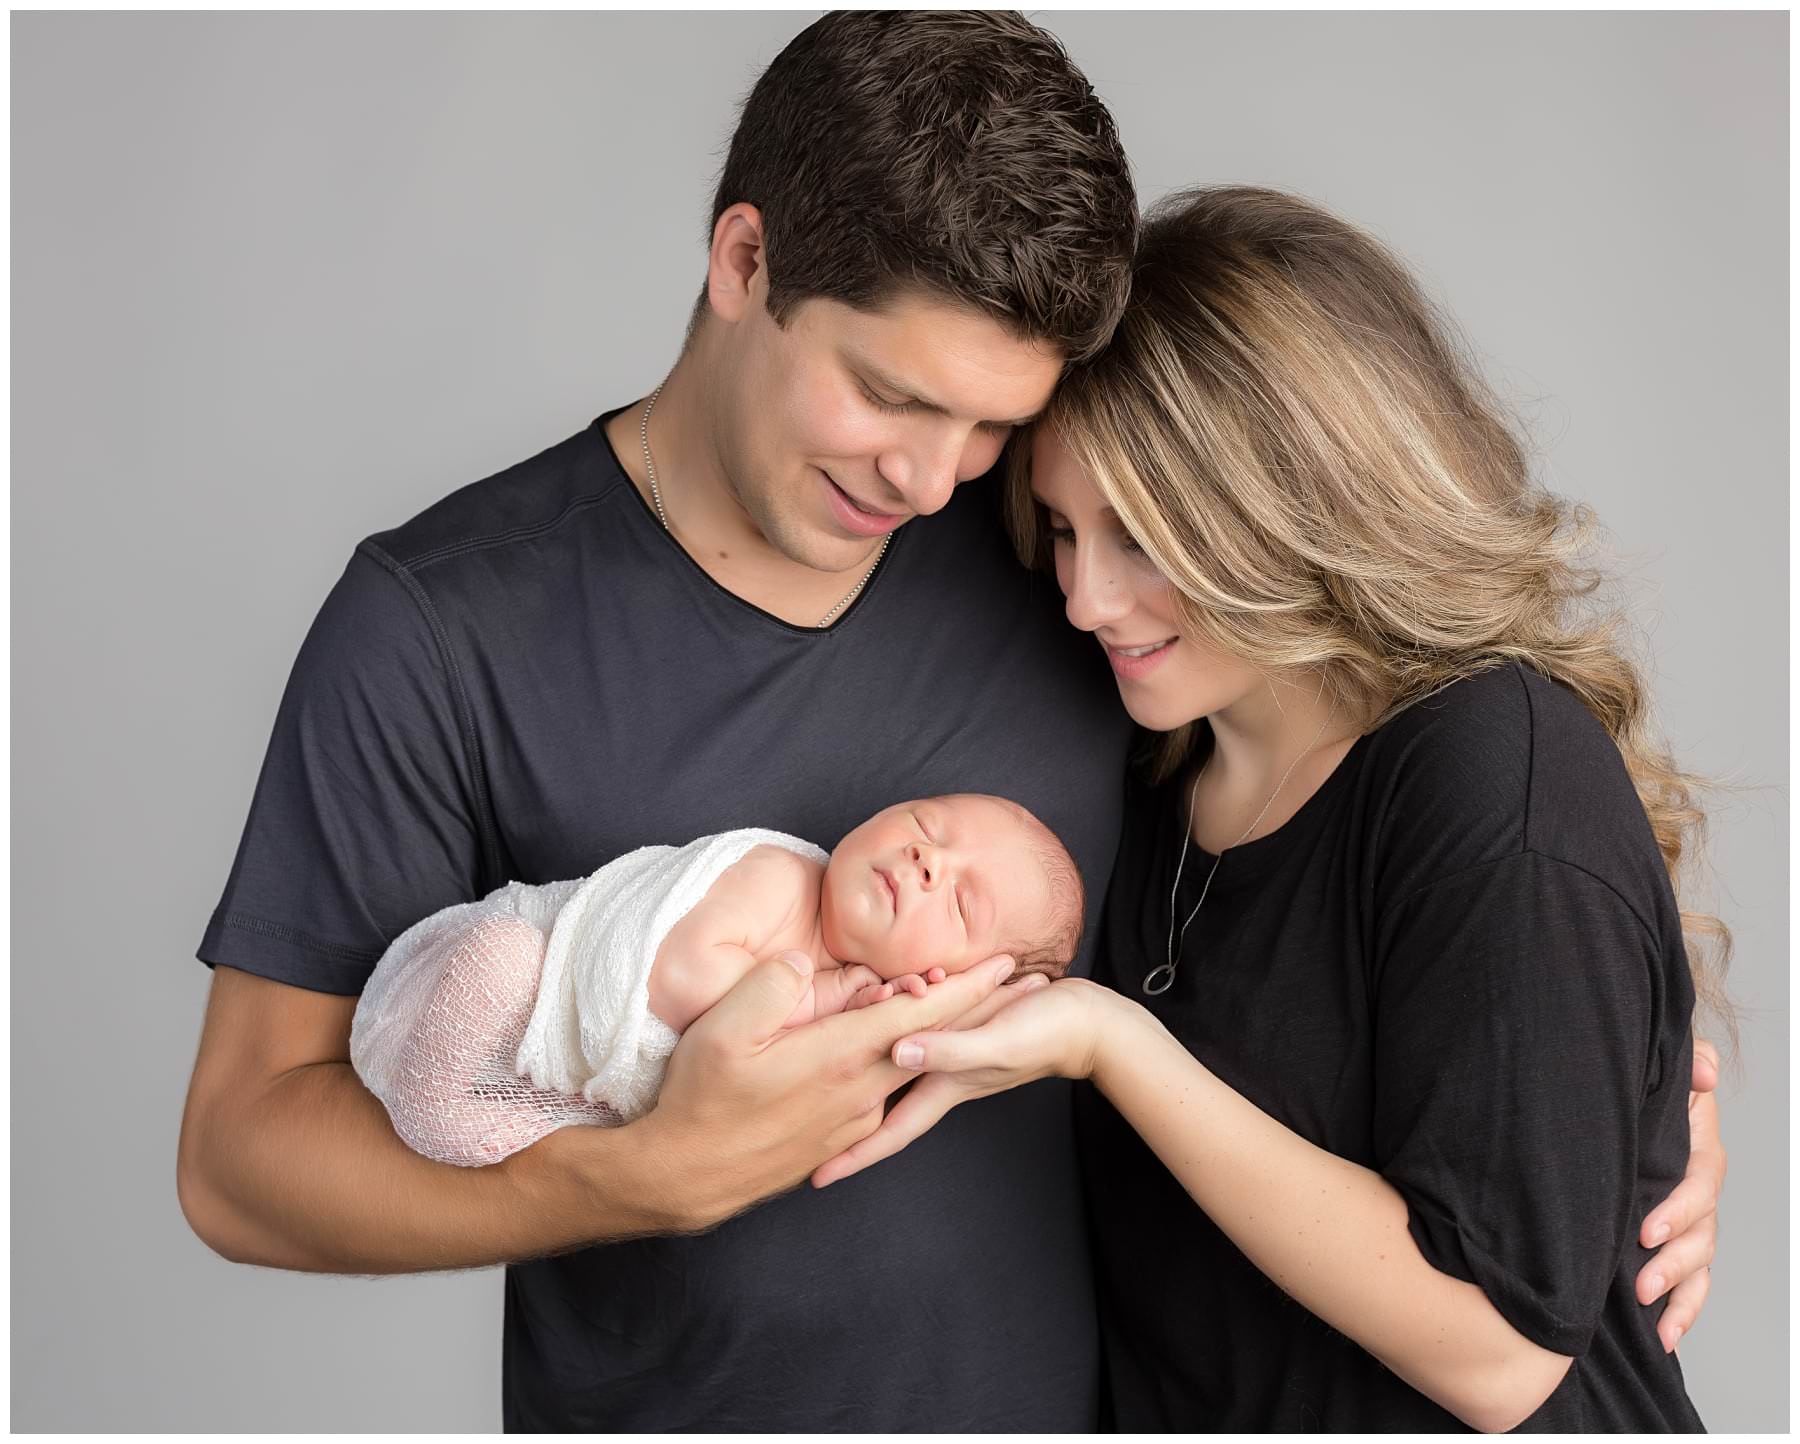 Newborn with family portrait